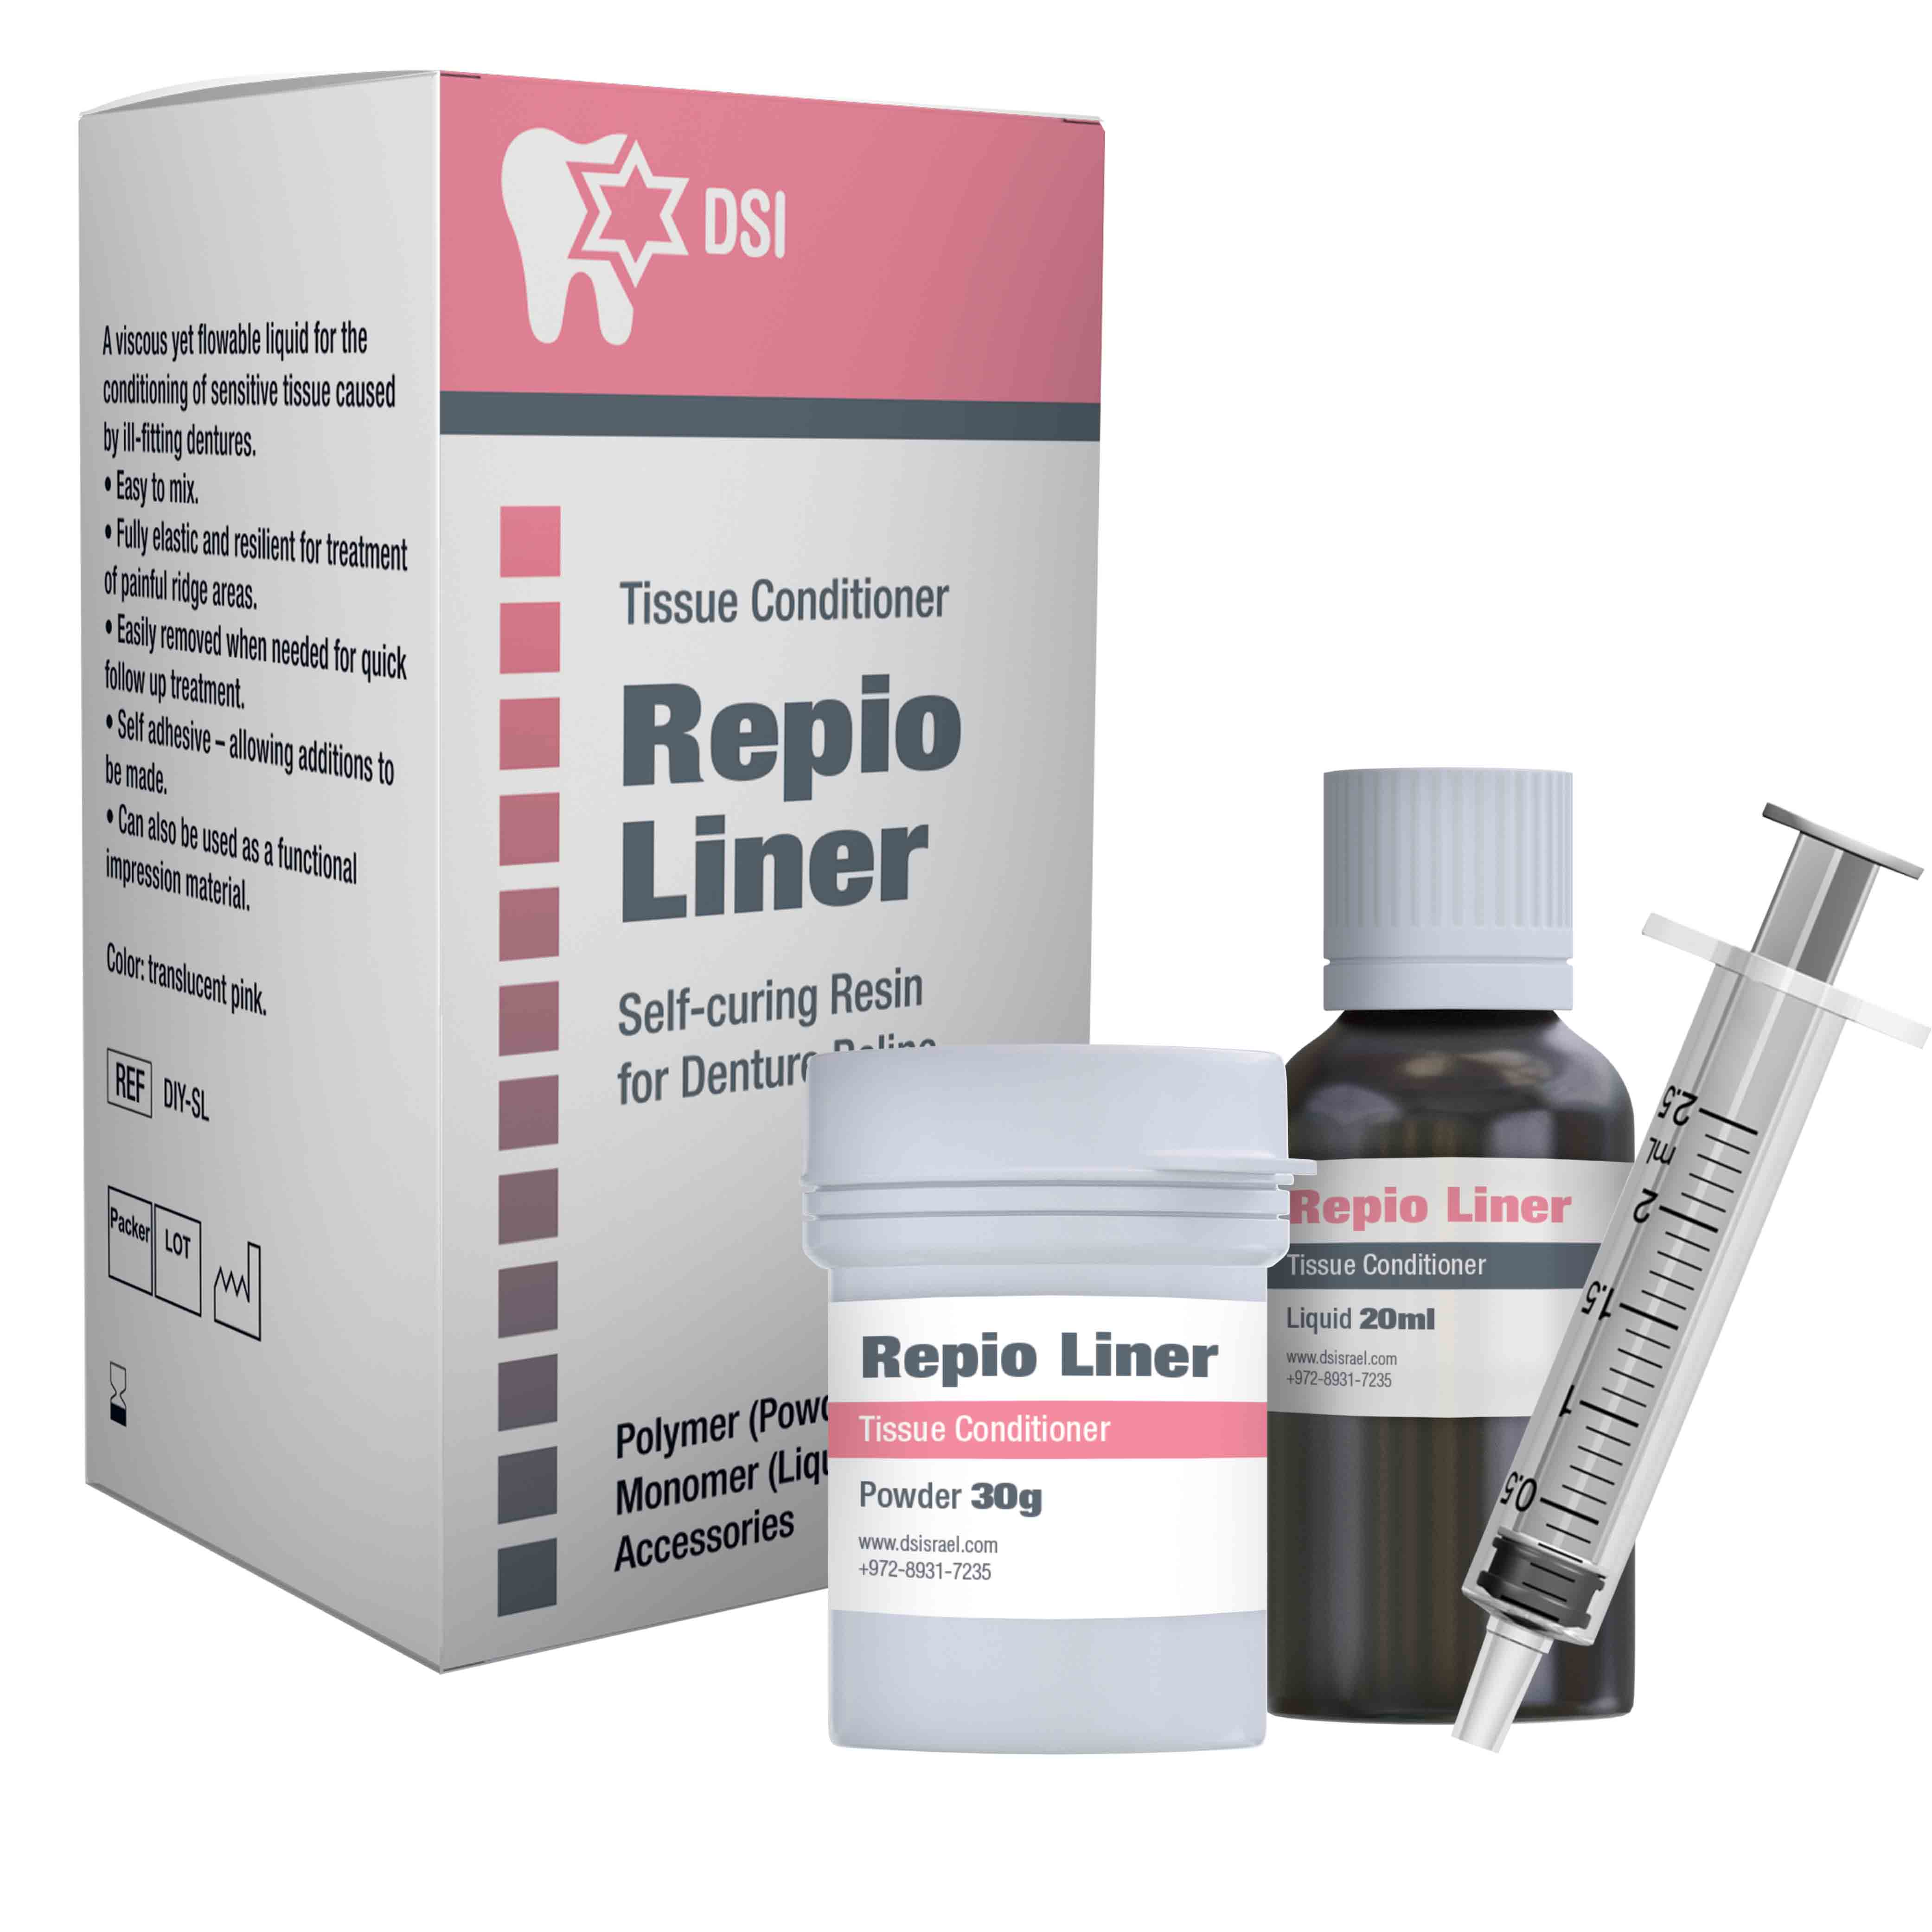 DSI DYI Repio Liner Self-Curing Resin for Denture Reline